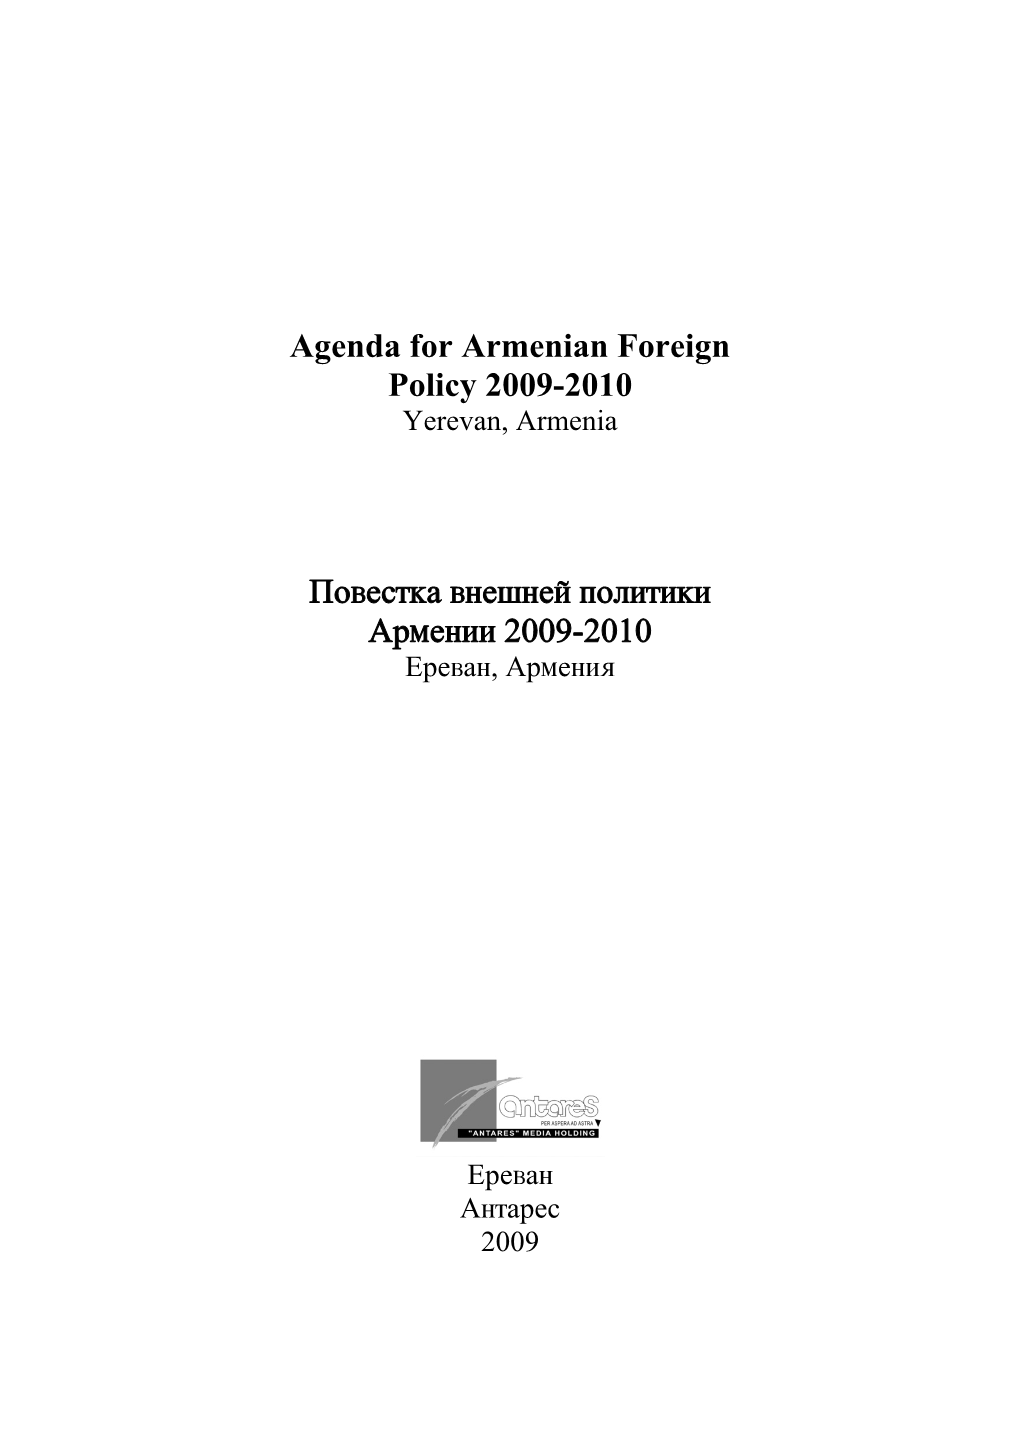 Agenda for Armenian Foreign Policy 2009-2010 Yerevan, Armenia